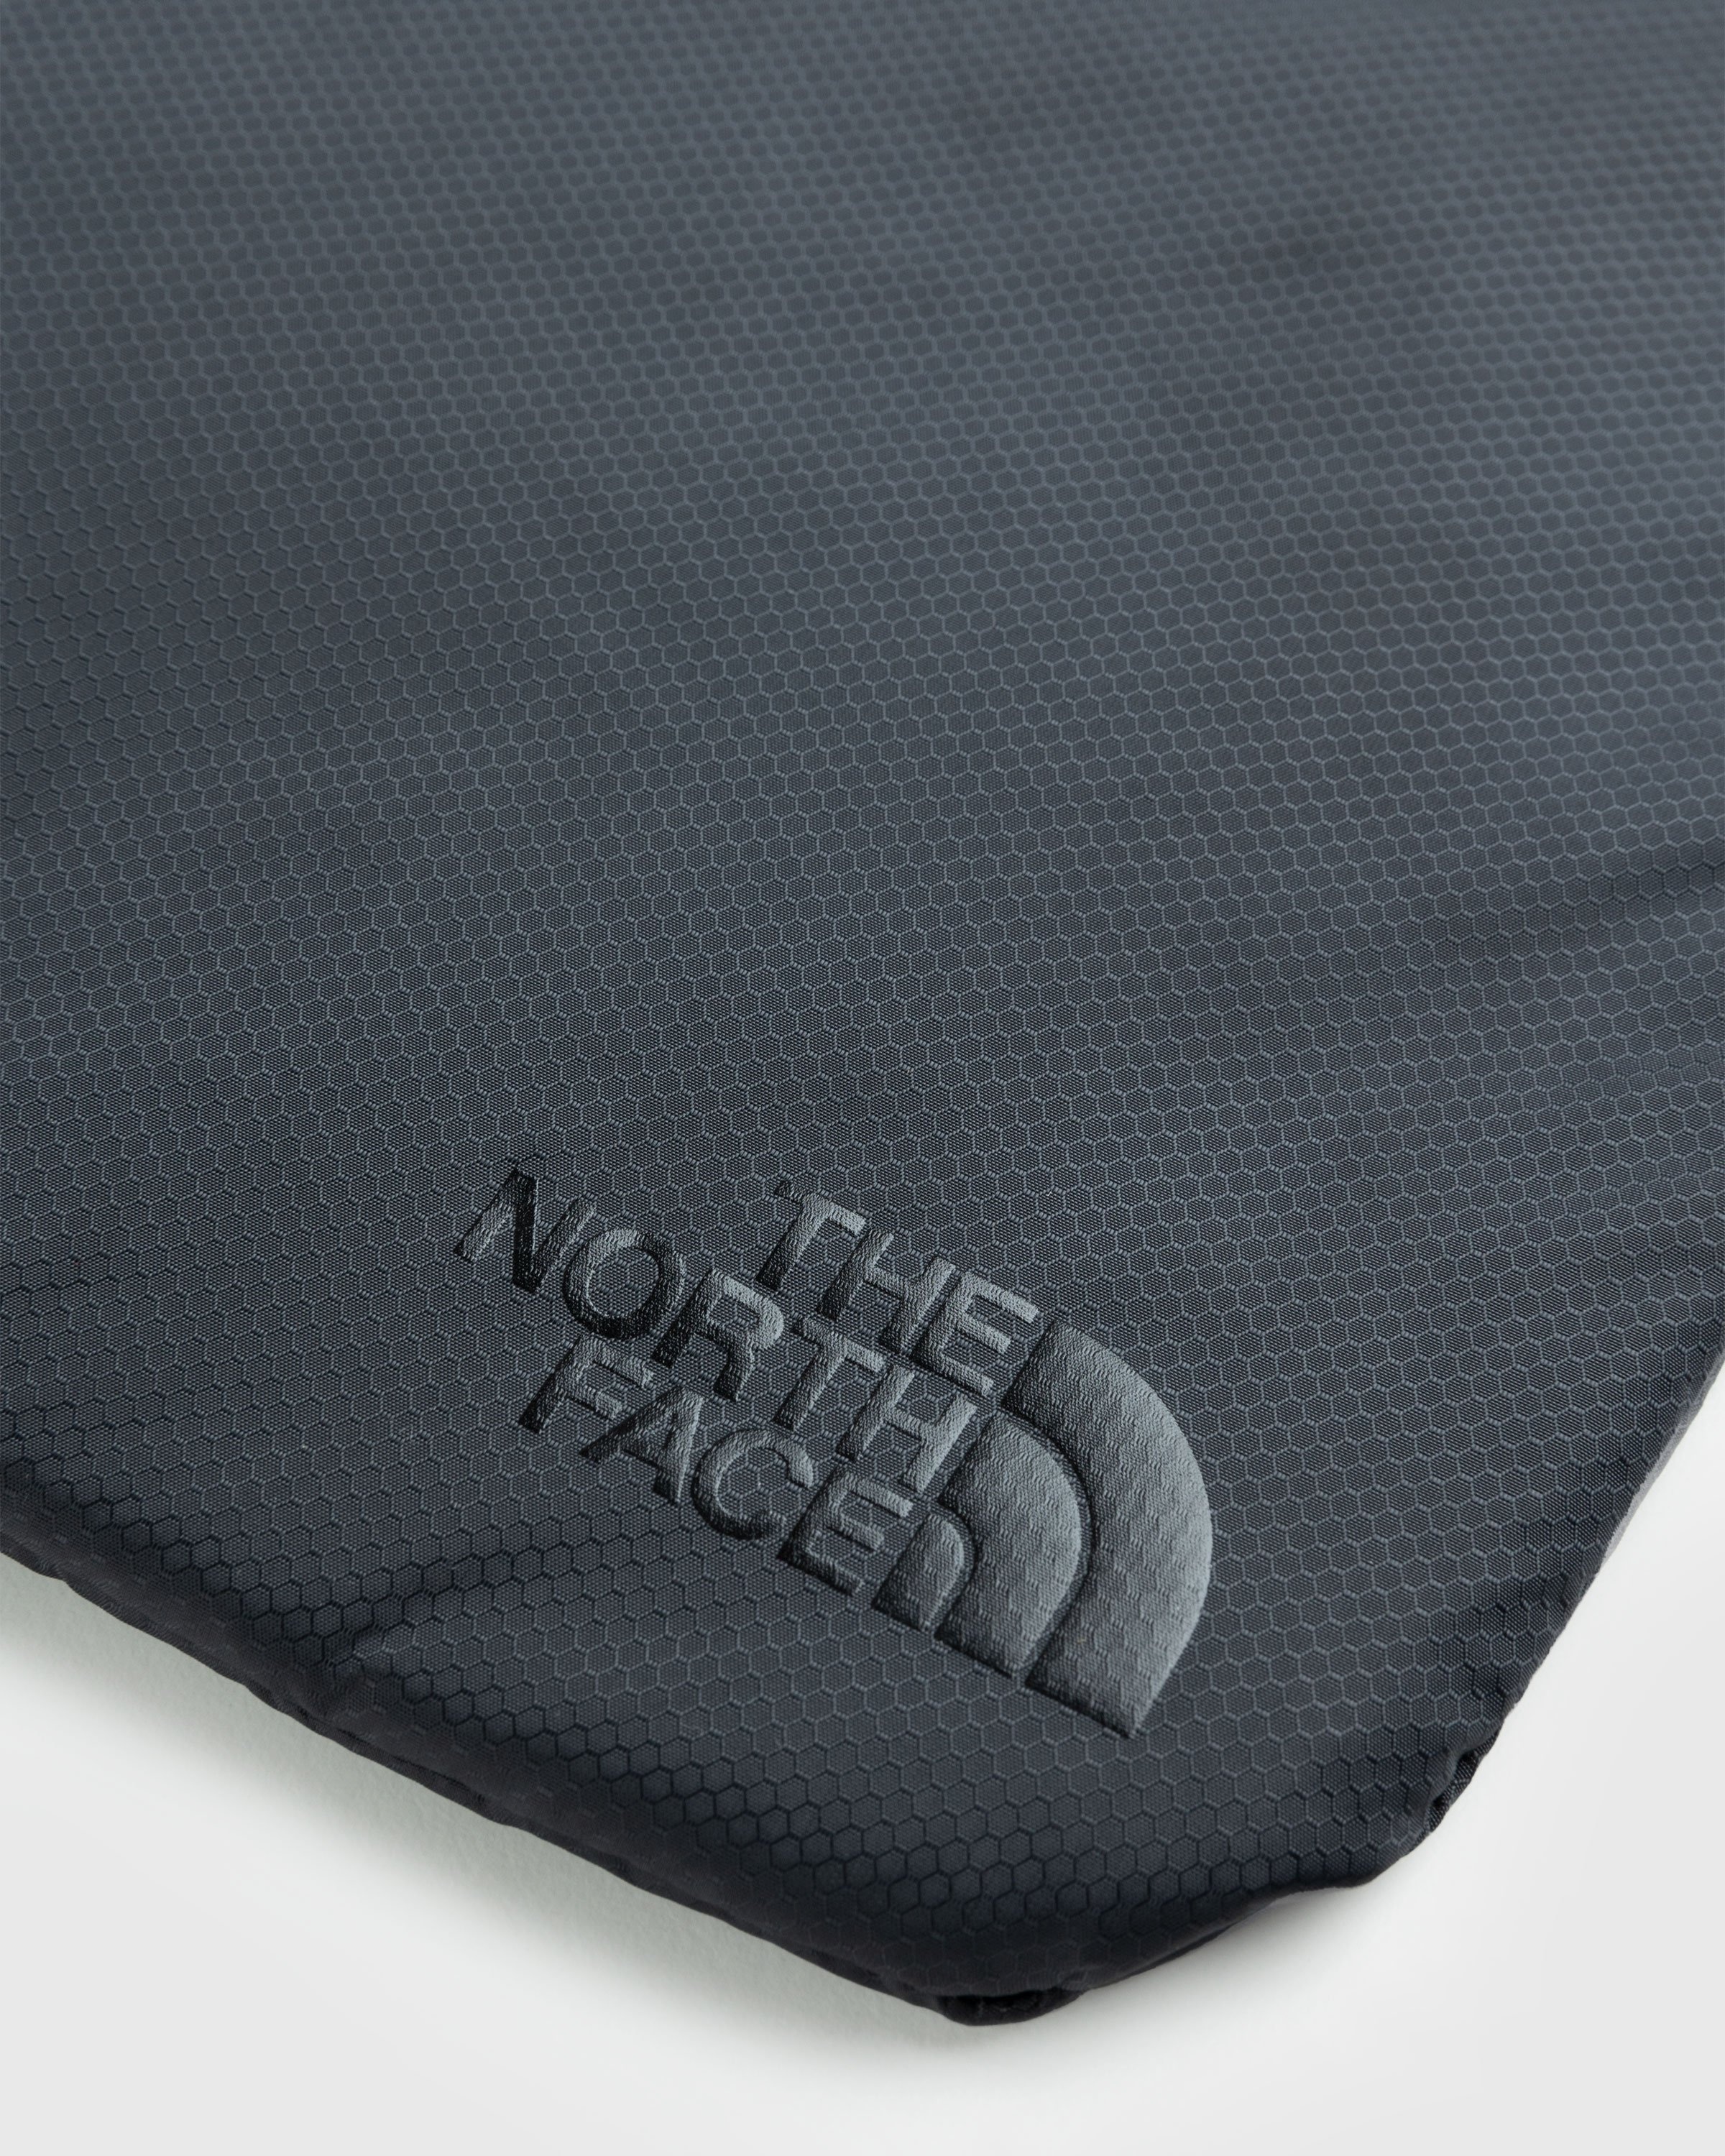 The North Face – Flyweight Laptop Sleeve 13” Asphalt Grey/TNF Black - Bags - Grey - Image 3